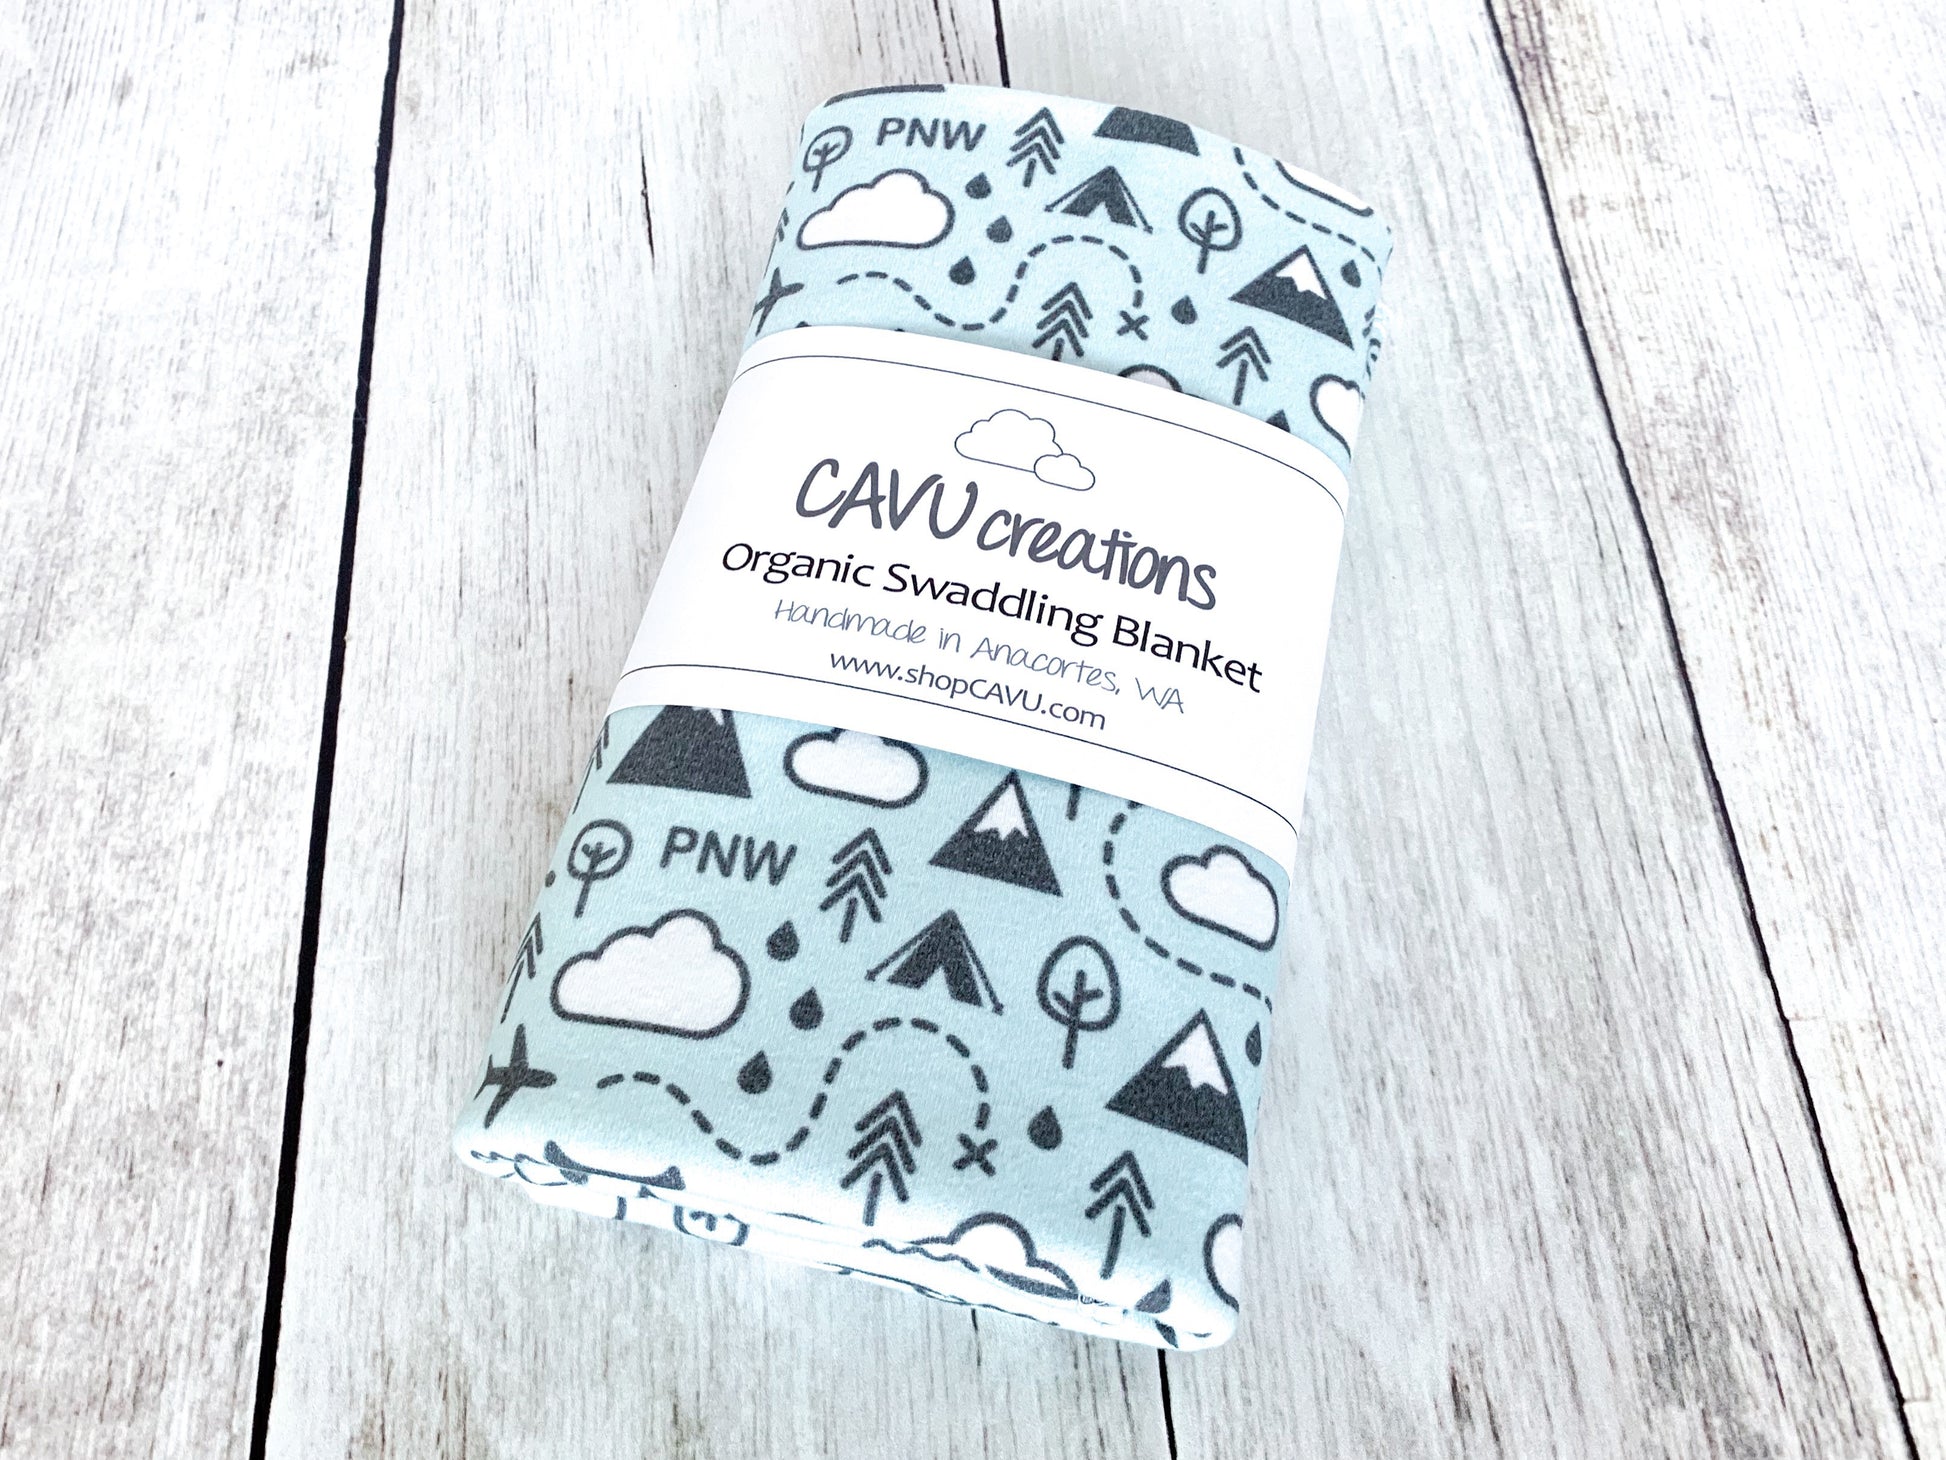 PNW Love Organic Swaddling Blanket - Mint / Gray / White - CAVU Creations